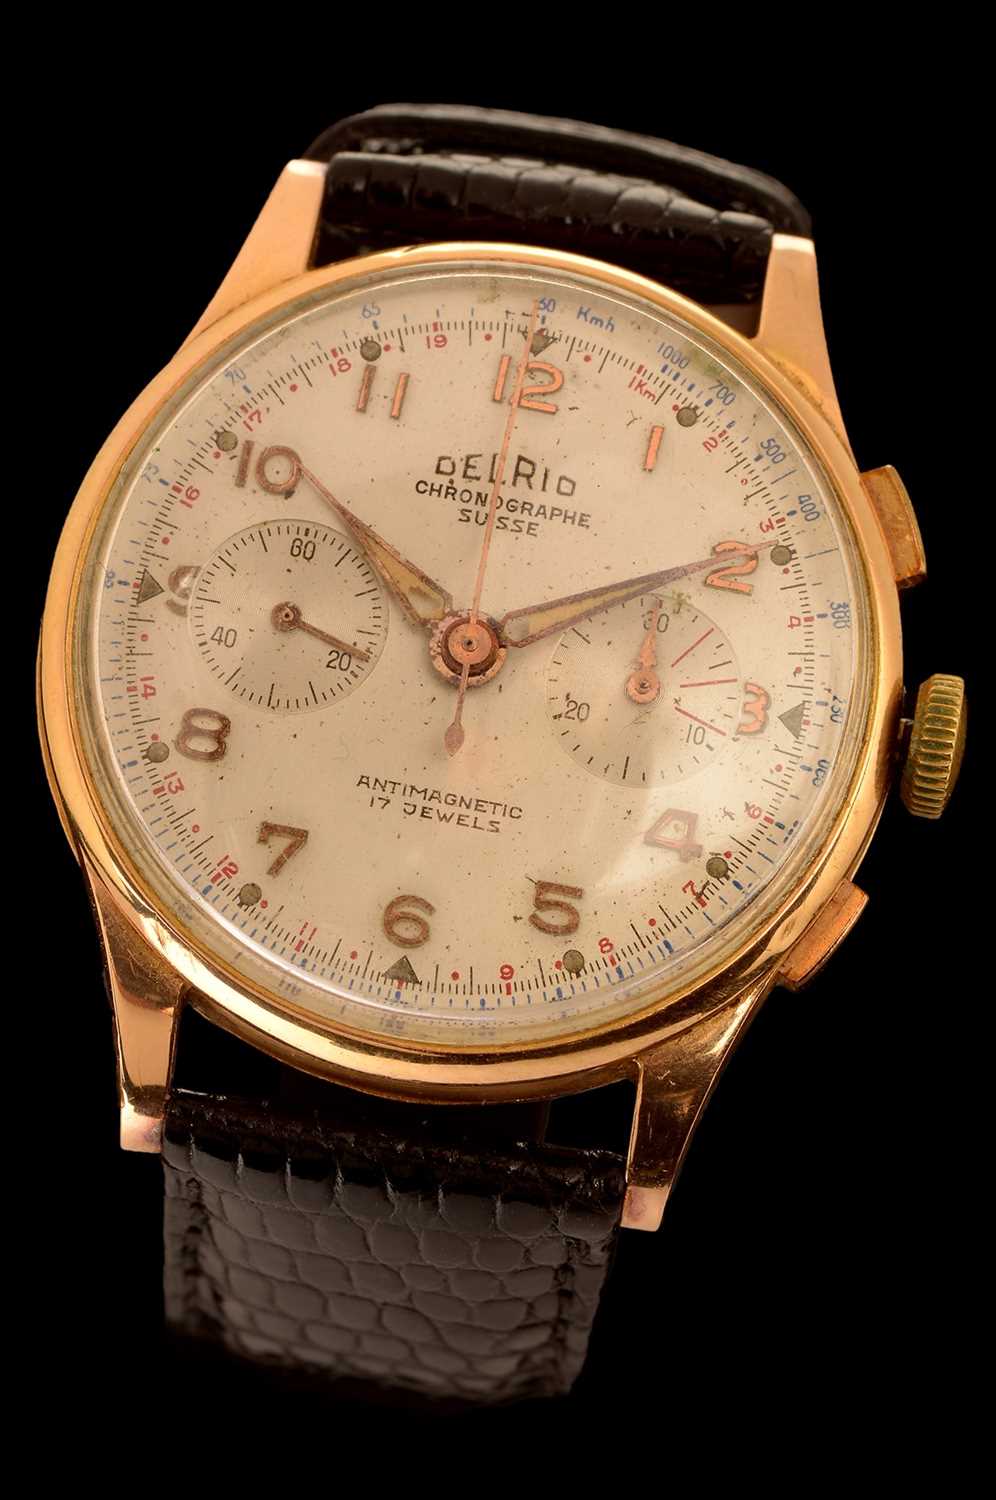 Lot 18 - Delrio Chronographe Suisse: a gentleman's 18k chronograph wristwatch